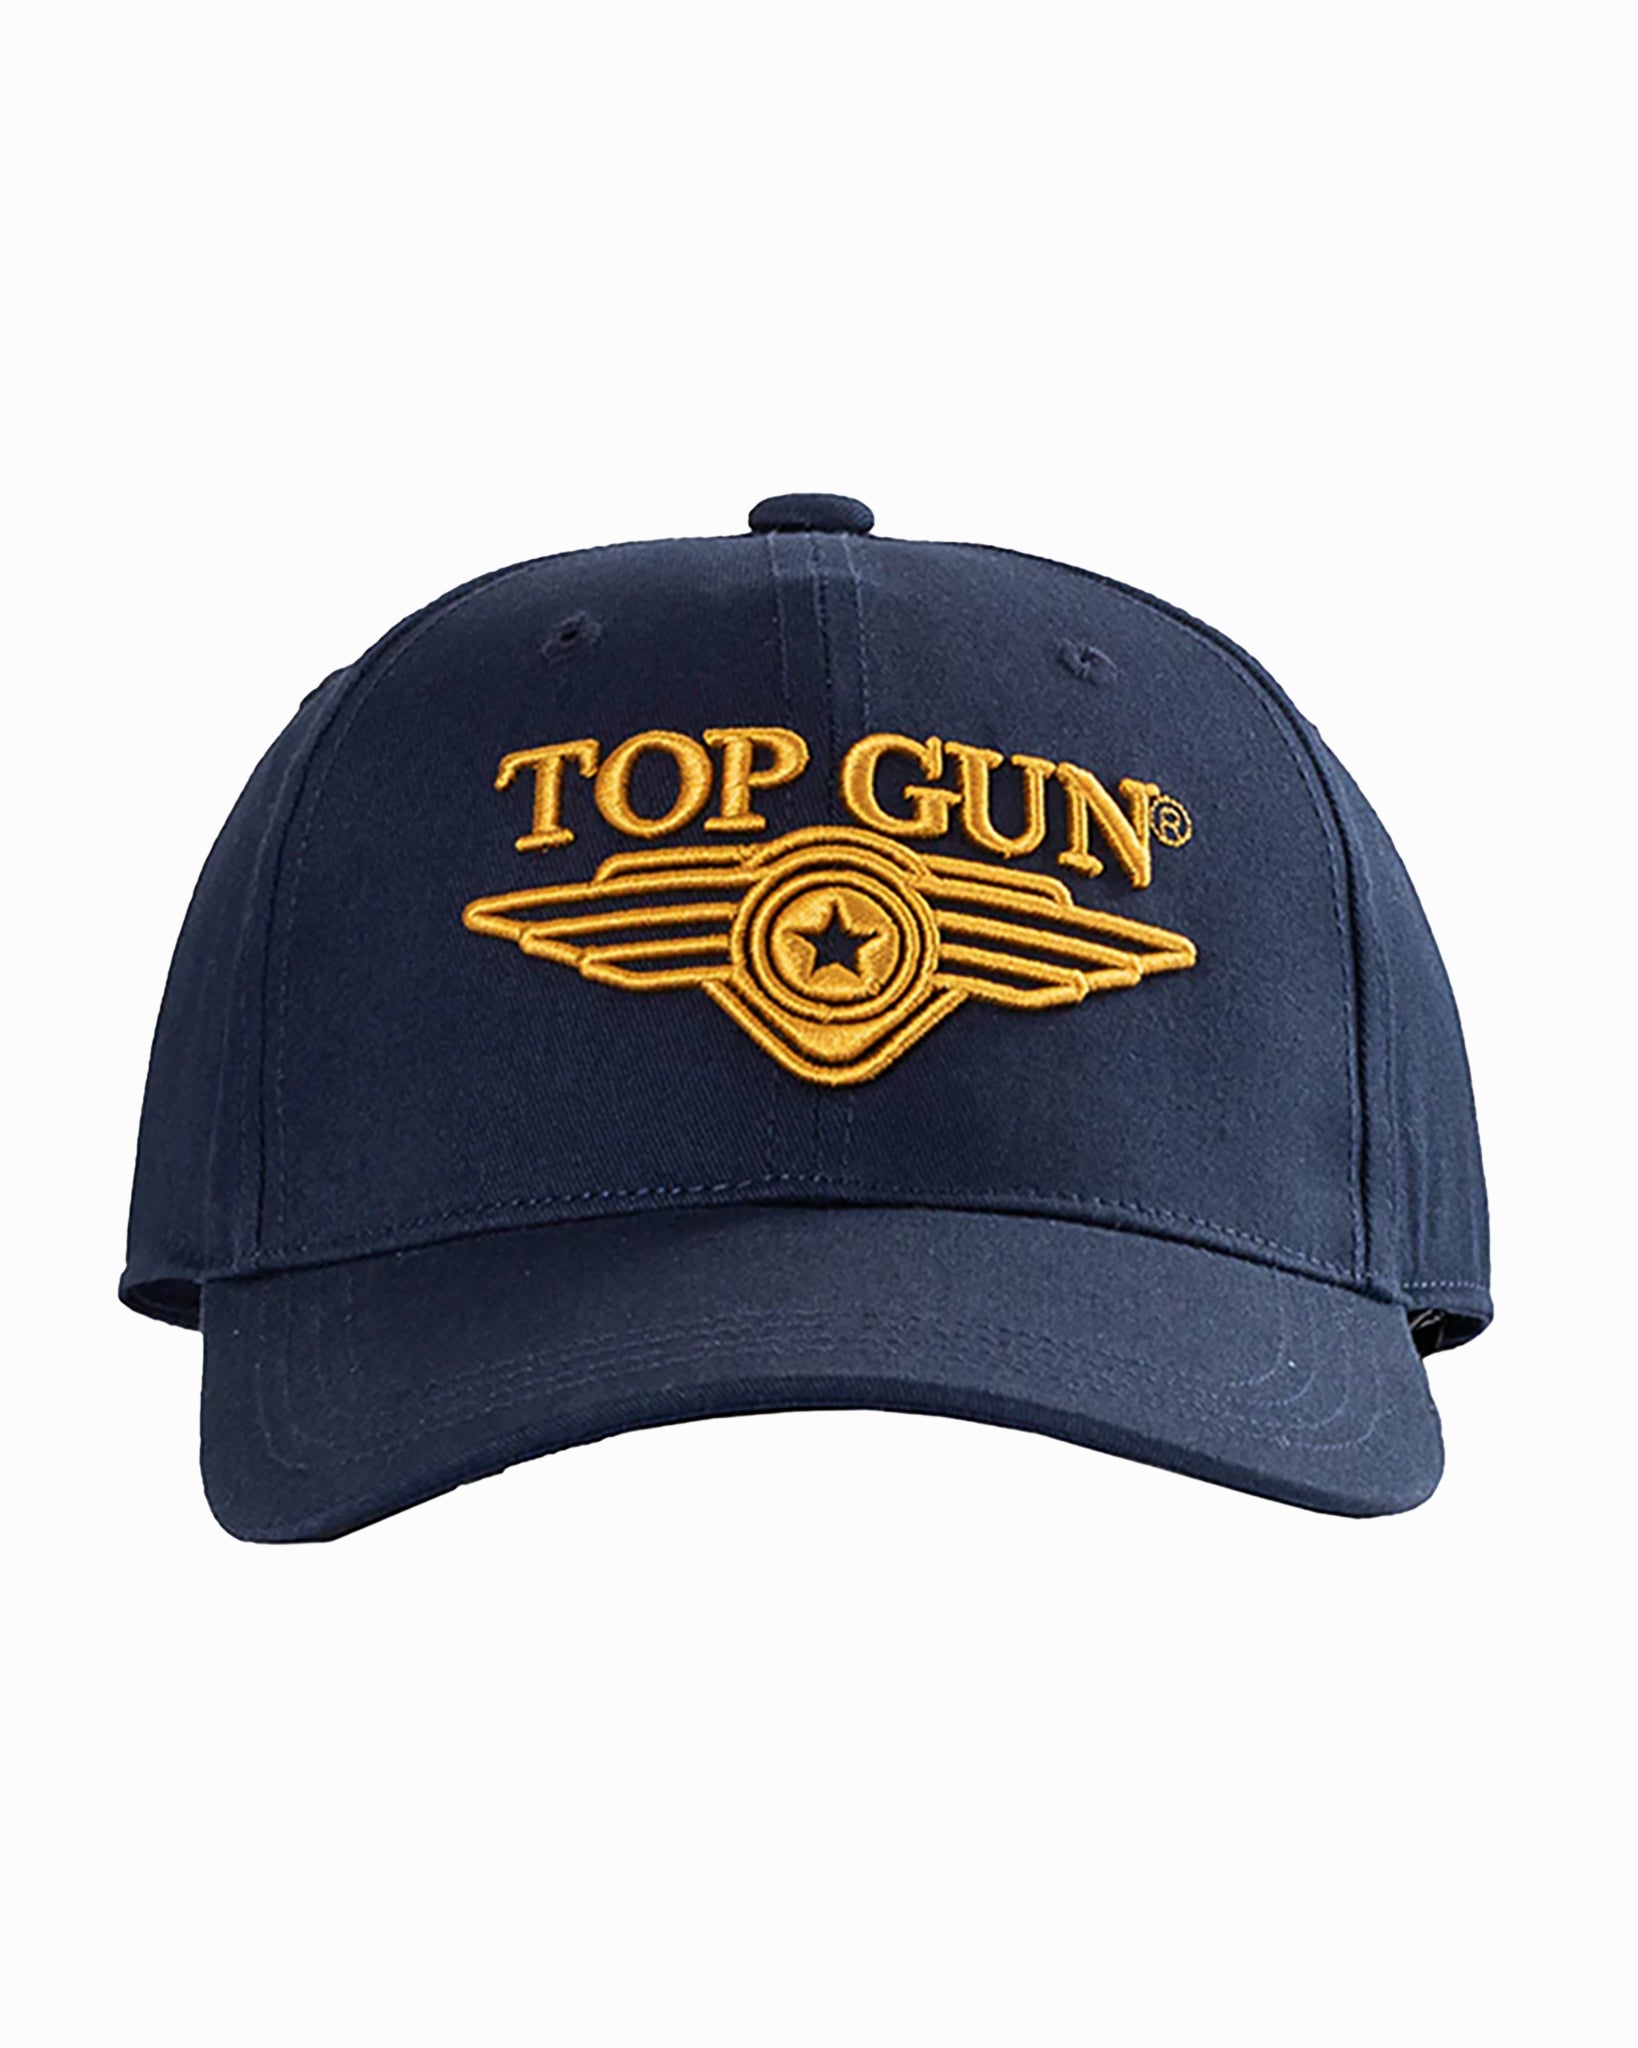 Top Gun: | Maverick Store and | Hat, Trucker Caps Official Store Cap, Gun Top More – Beanie